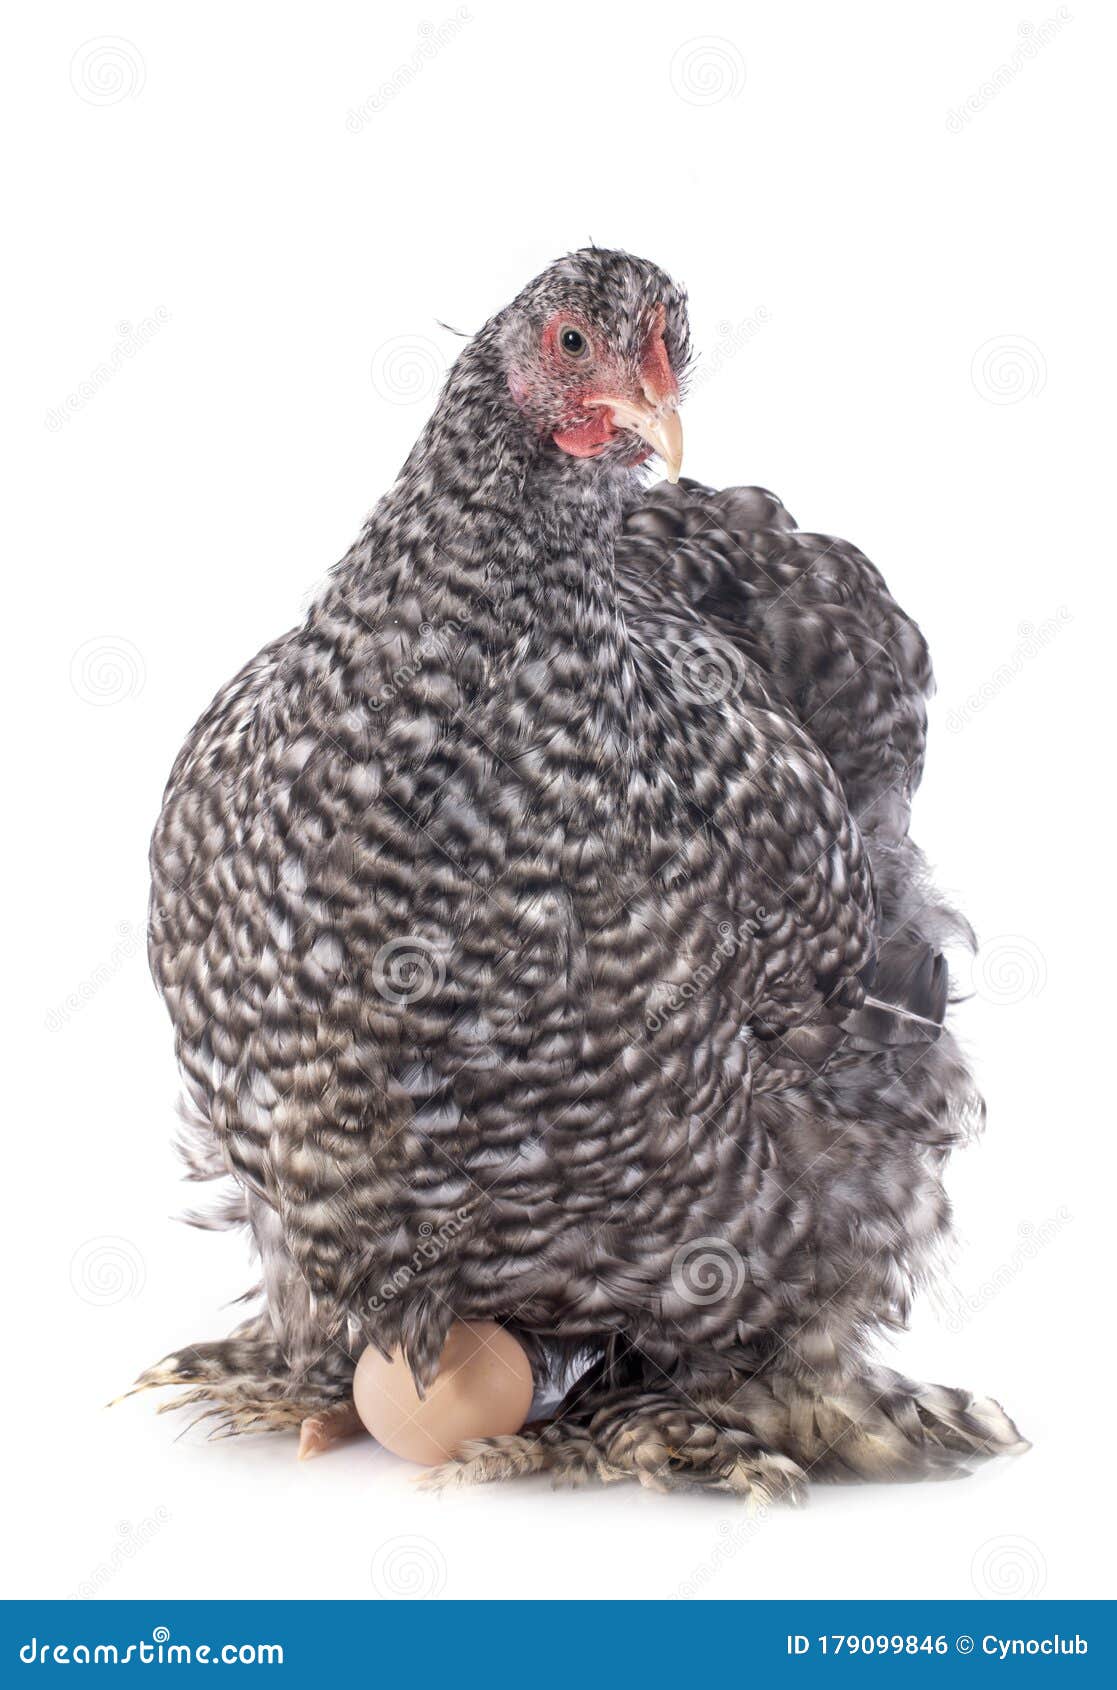 cochin chicken in studio